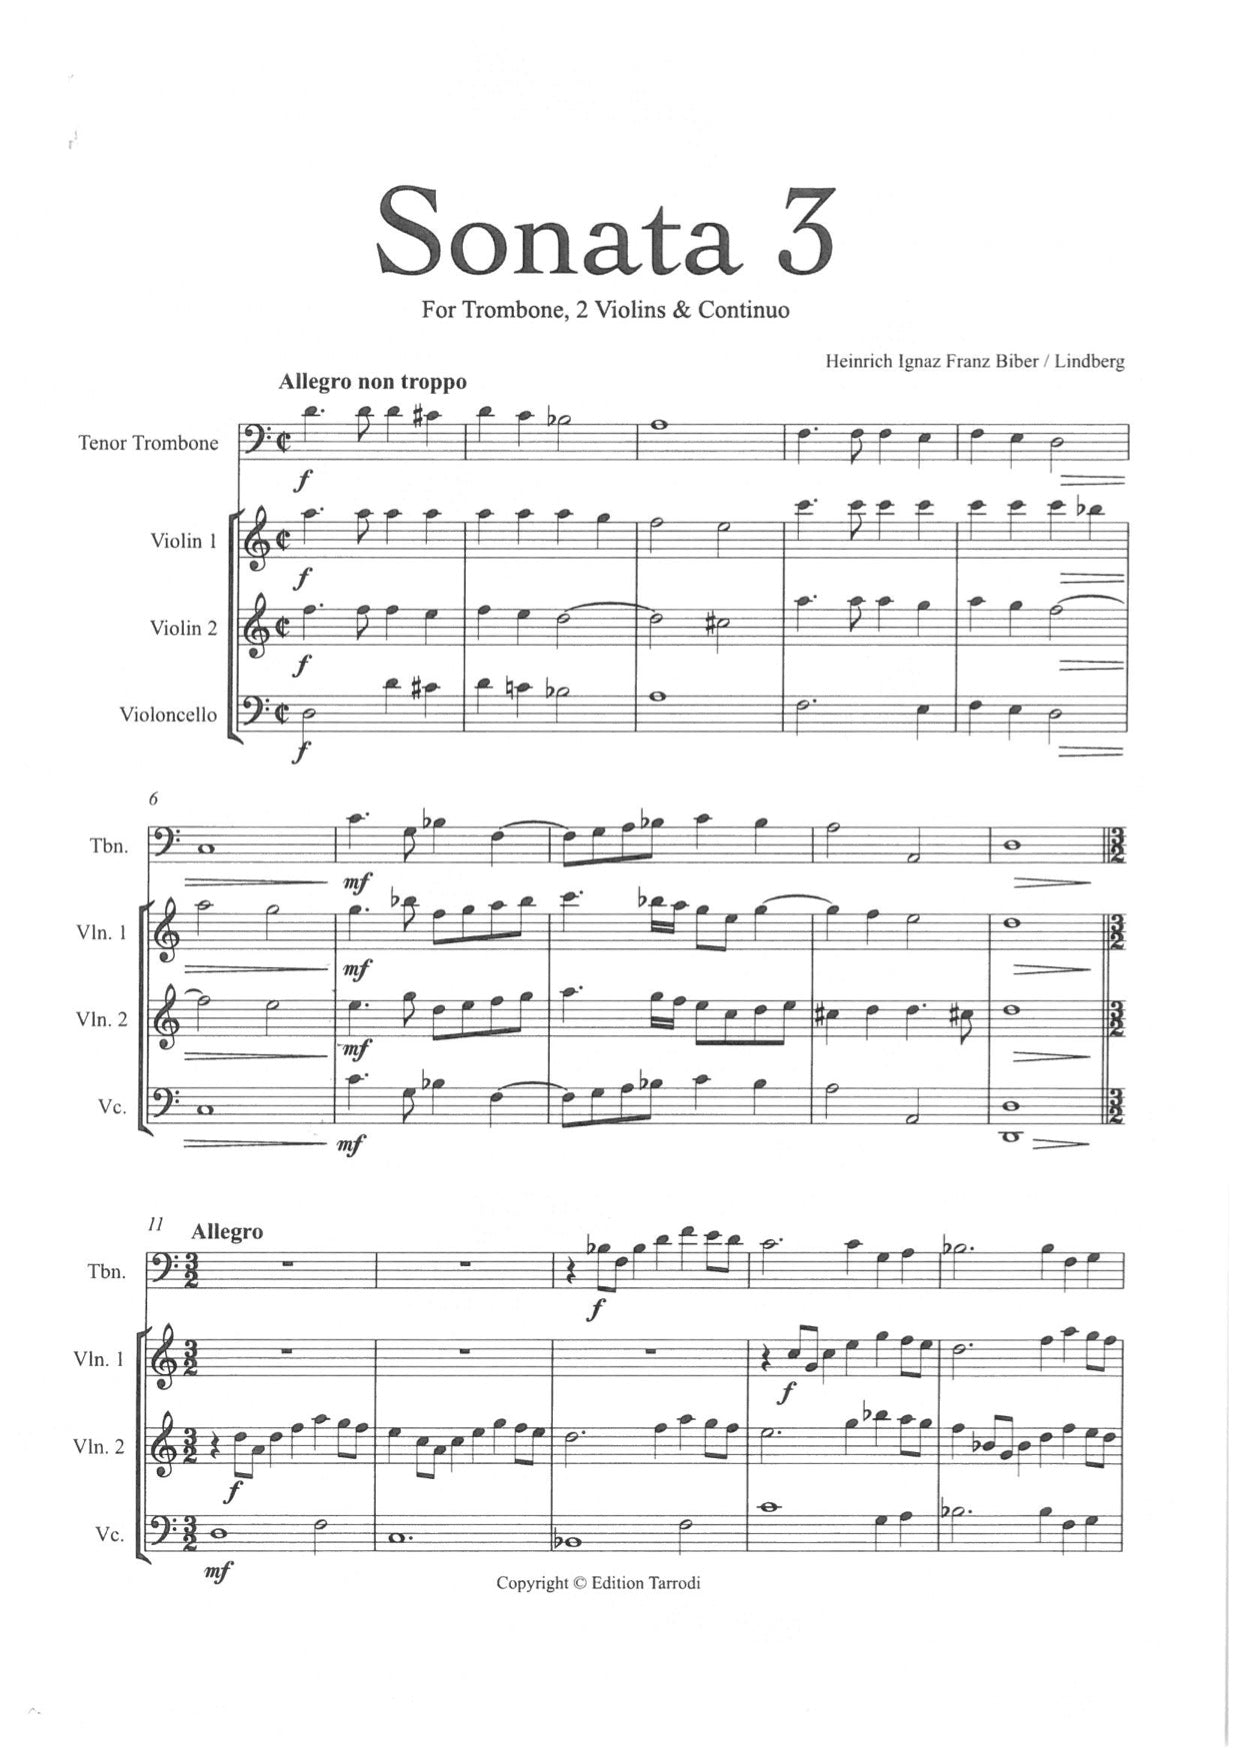 Biber / Lindberg Sonata a 3 Trb, 2 Vln, Vcl